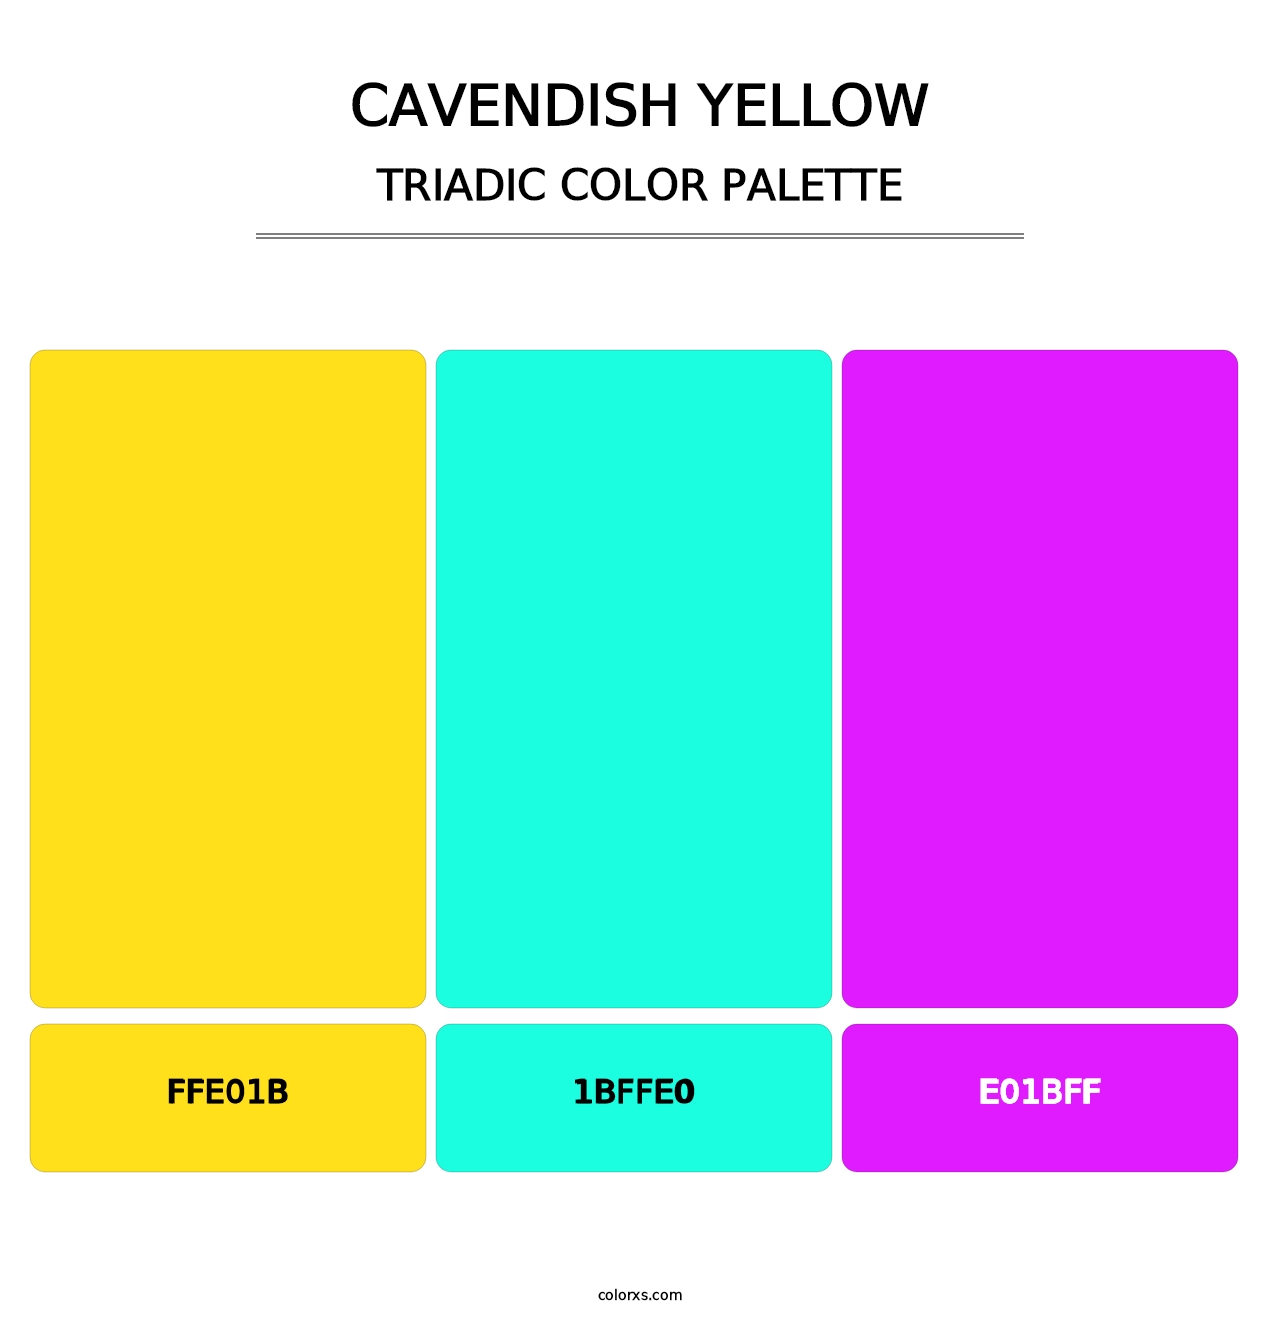 Cavendish Yellow - Triadic Color Palette